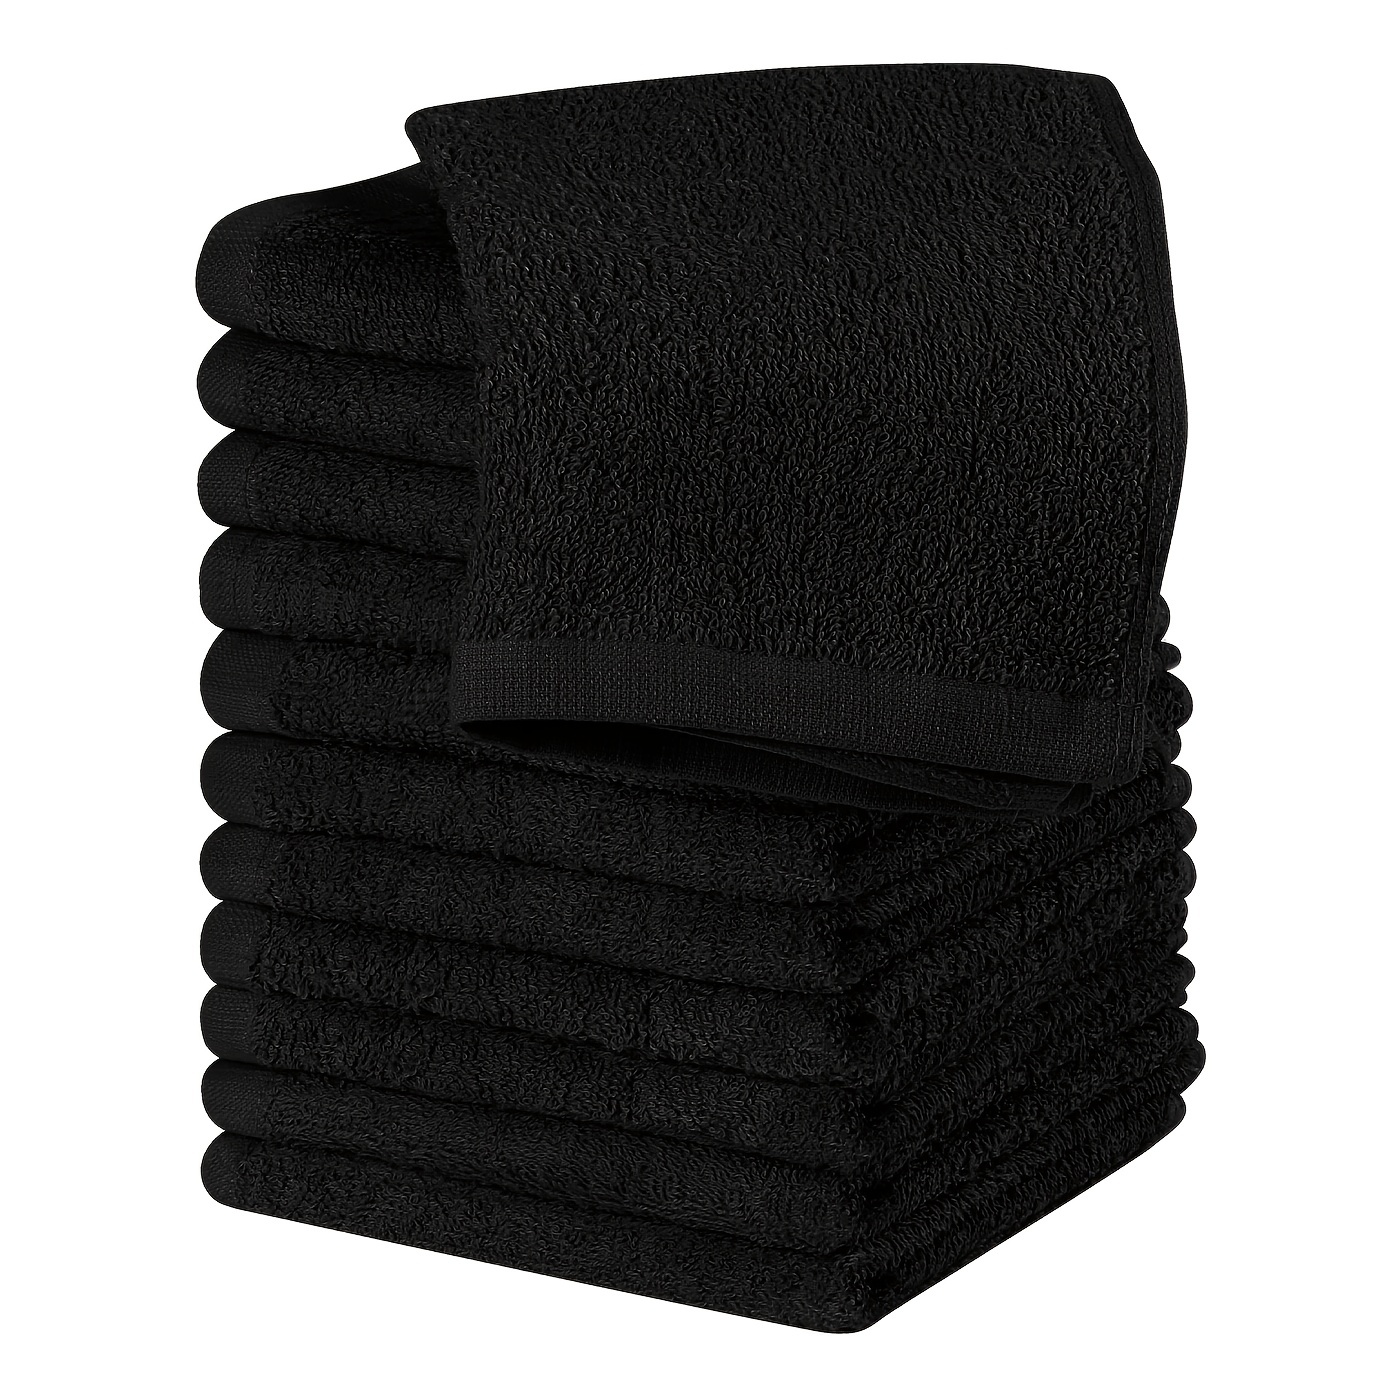 Comprar Toalla de baño grande negra, toallas gruesas de algodón